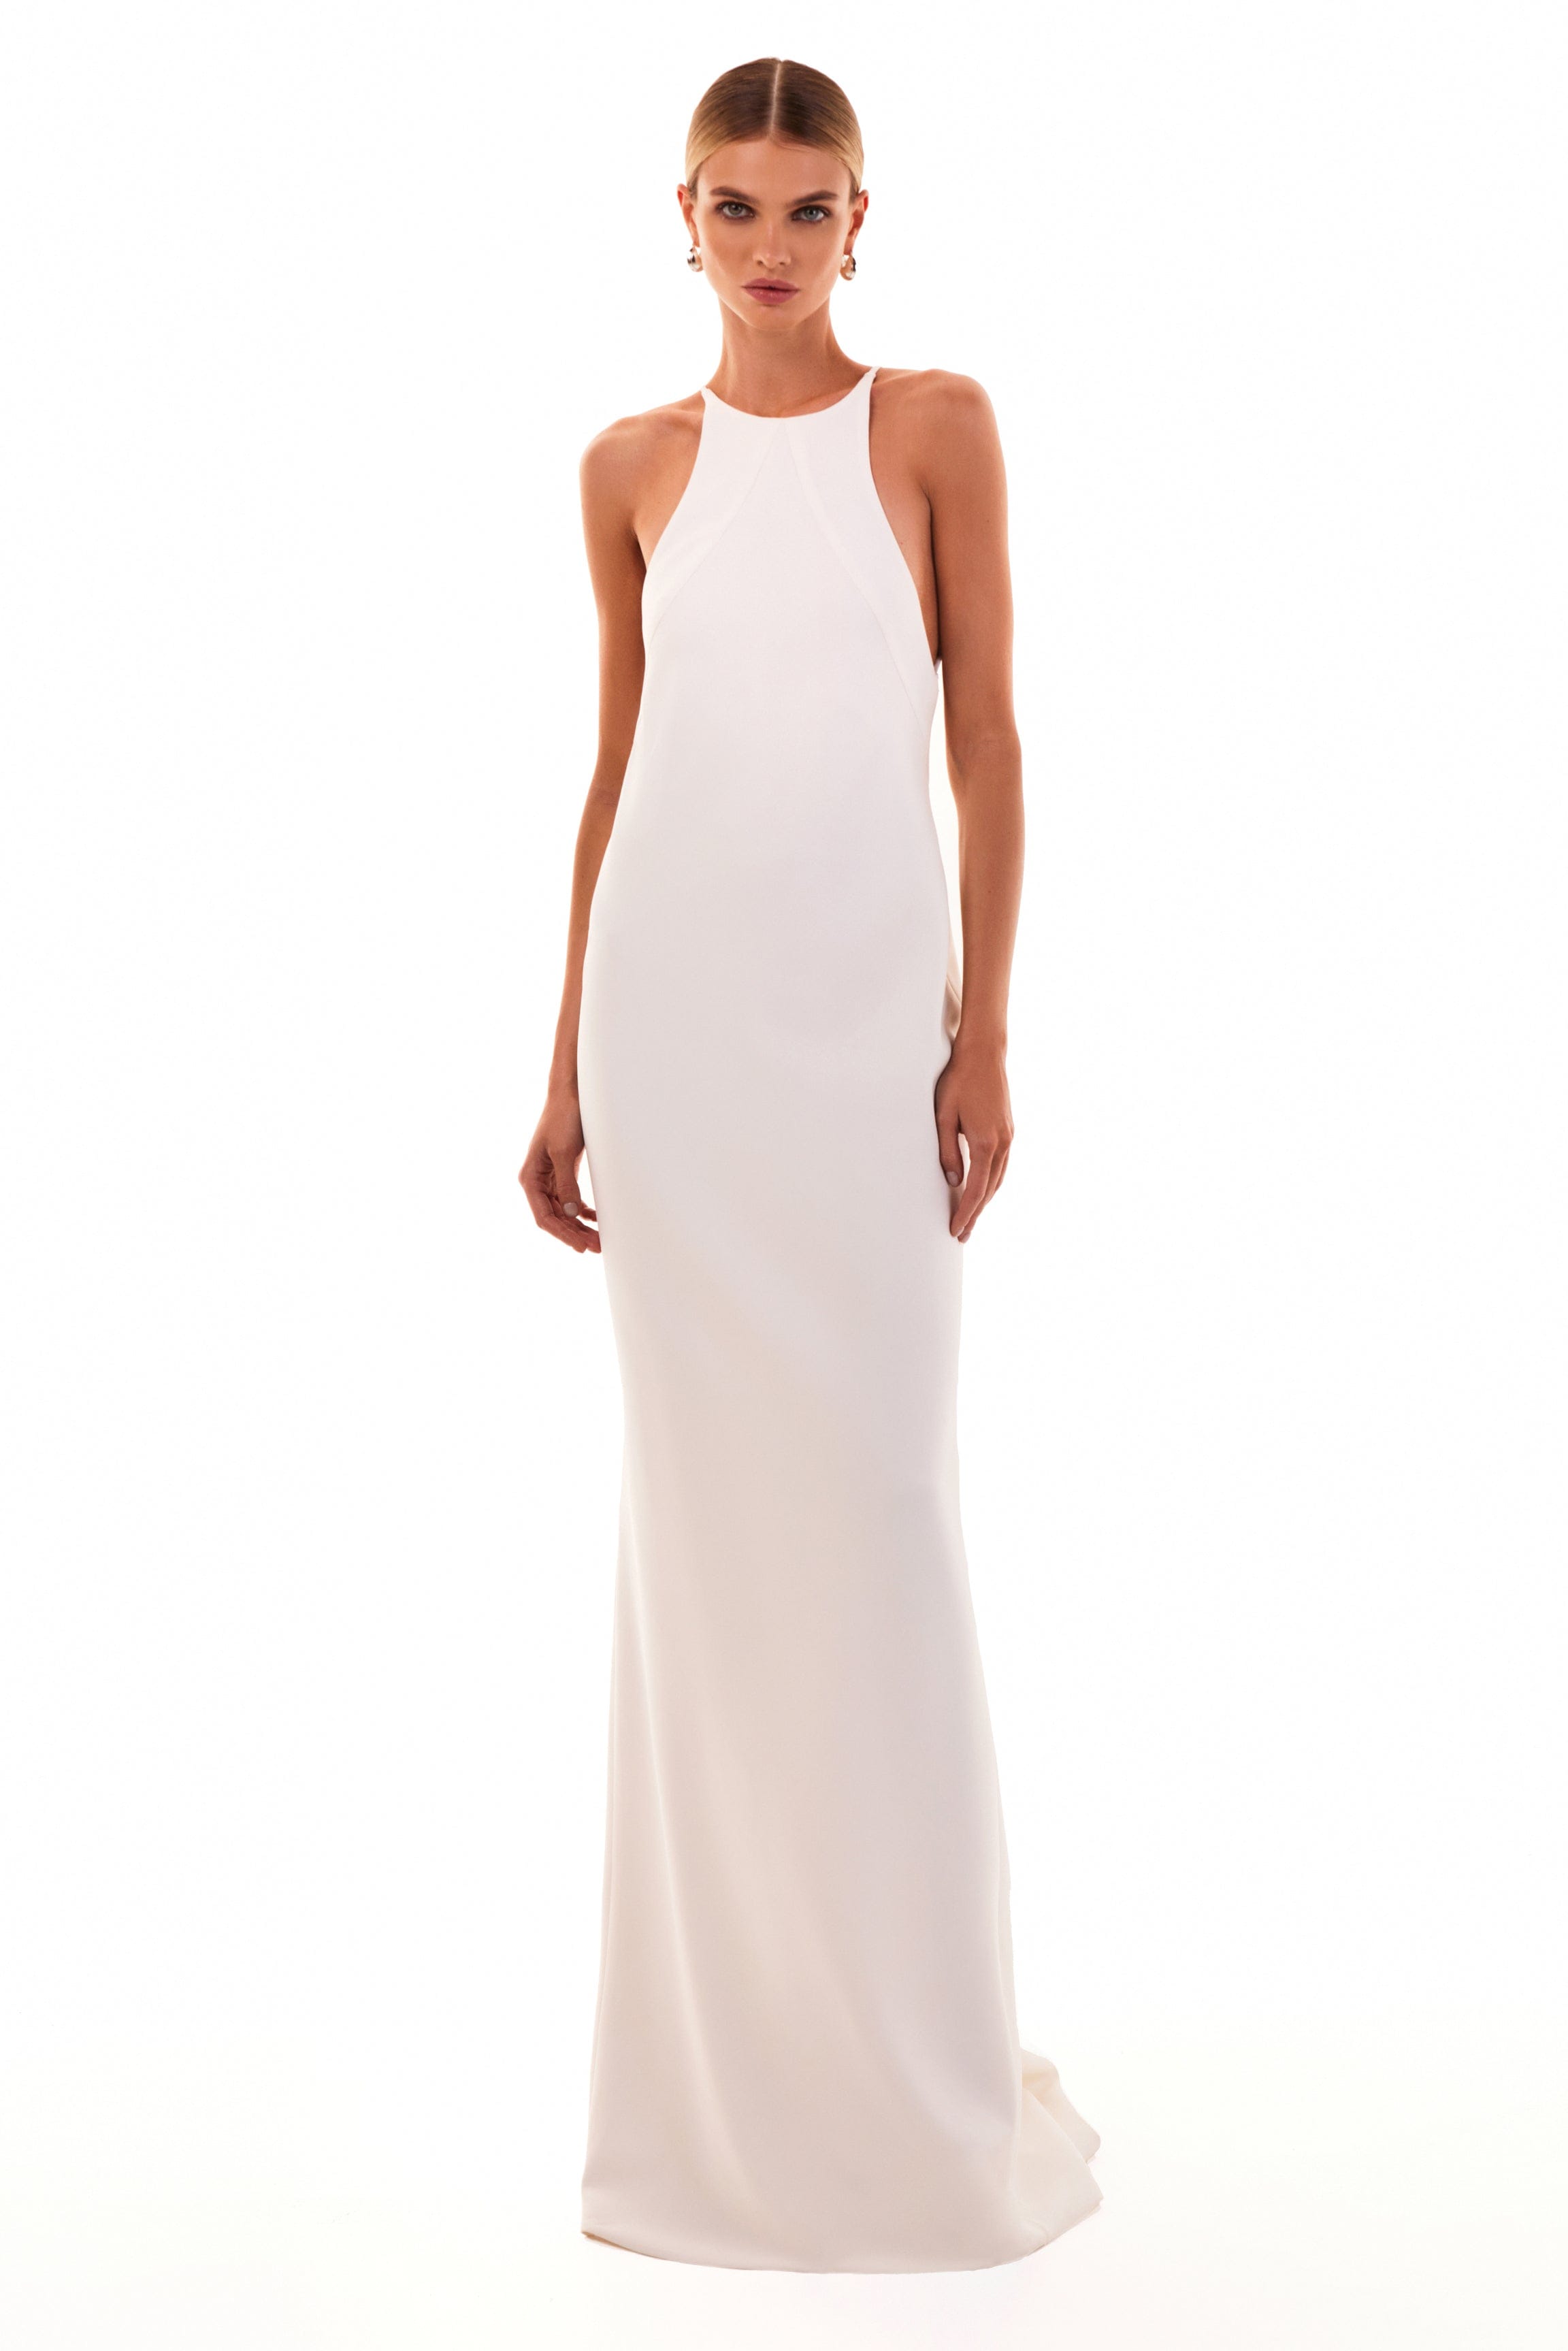 Lustrous white halterneck maxi dress